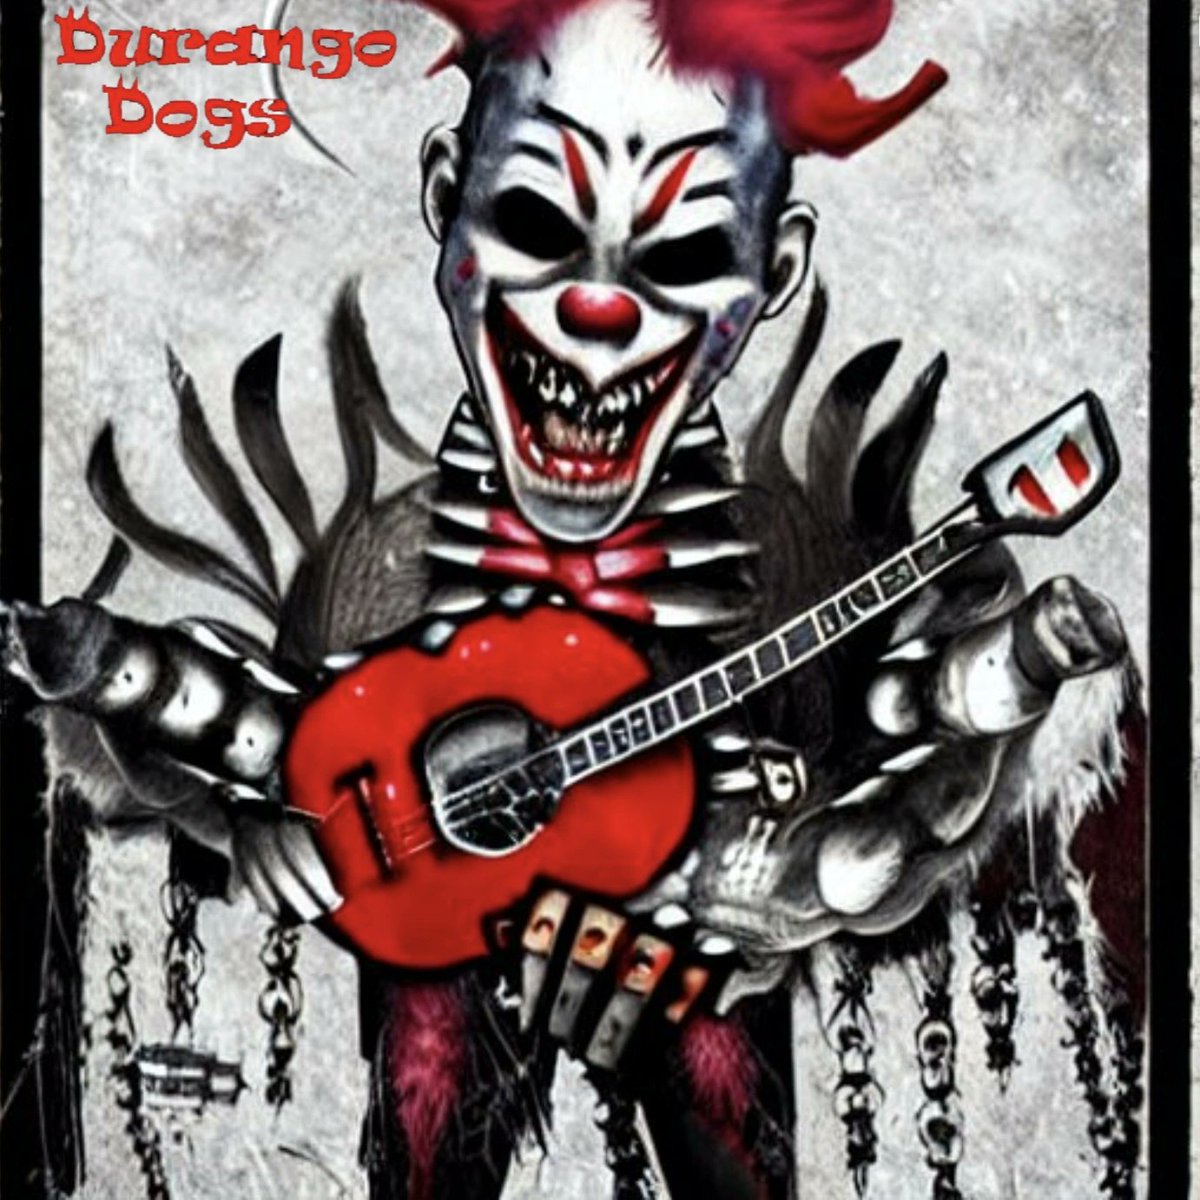 #DurangoDogs #thrash #rockmusic #shockrock #metal #punk #zombie #crow #punkrocks #grunge